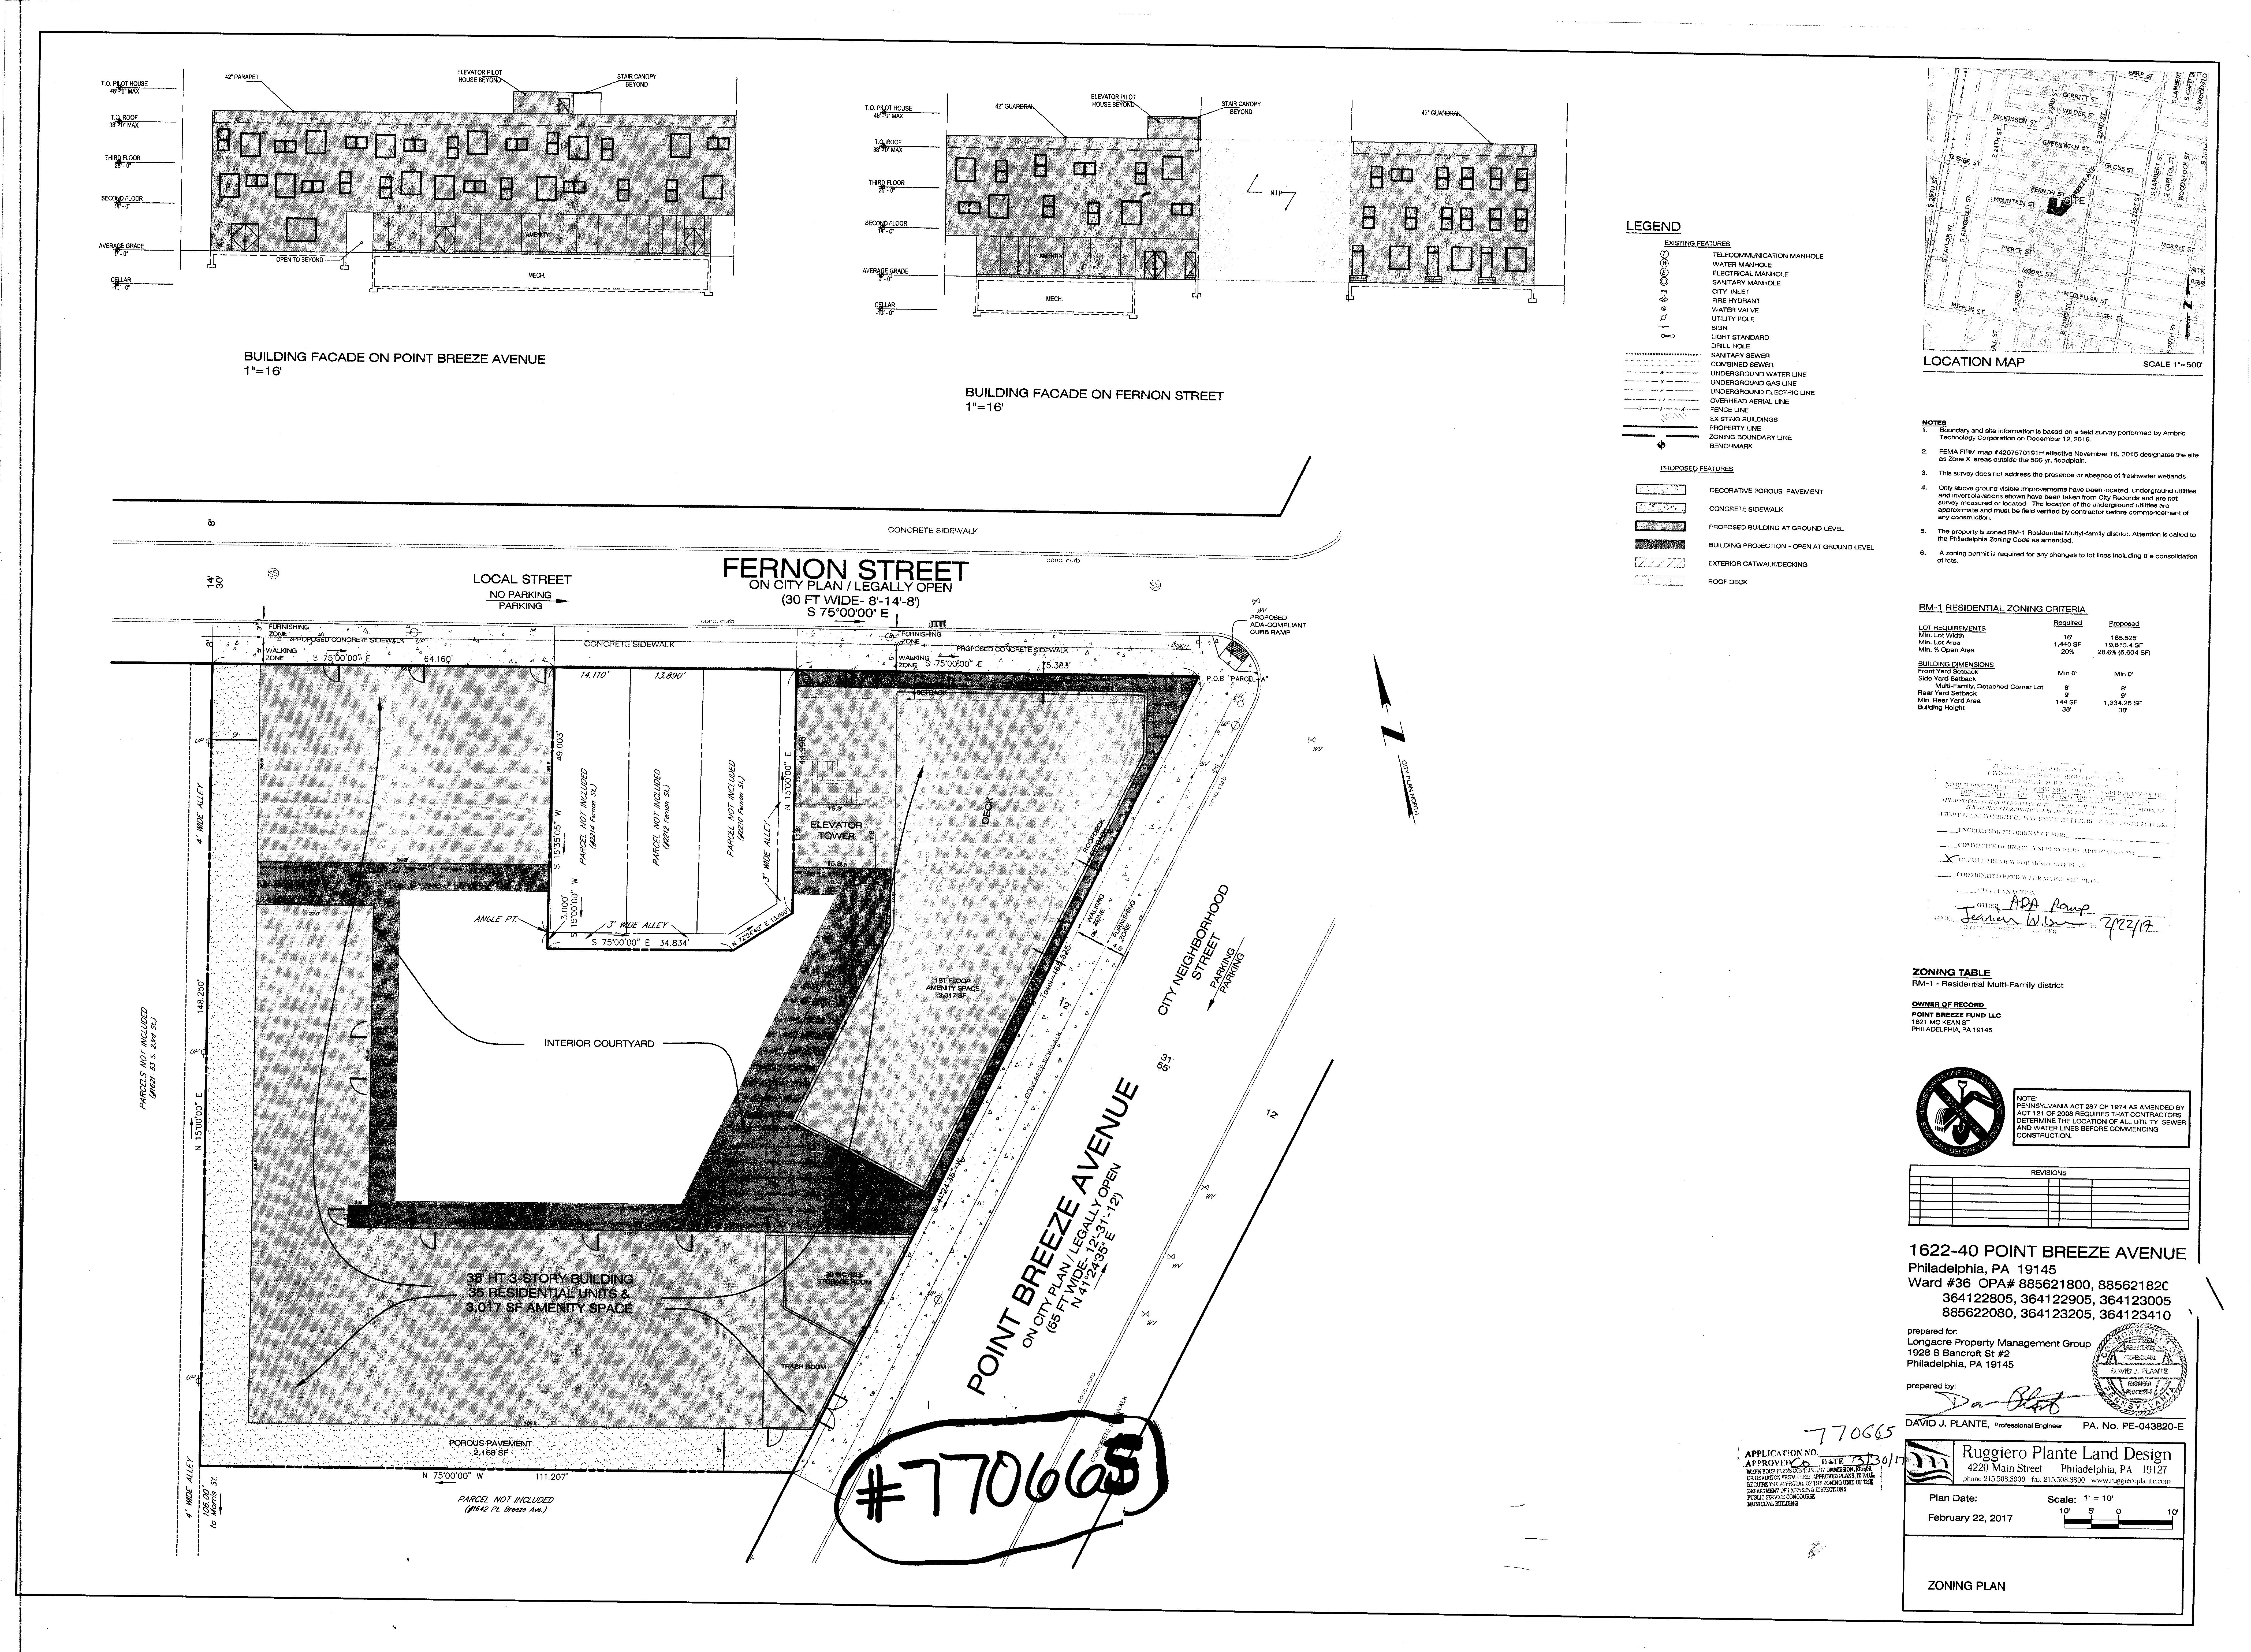 1622-40 Point Breeze Avenue. Original design and site plan. Credit: Ruggiero Plante Land Design via the City of Philadelphia